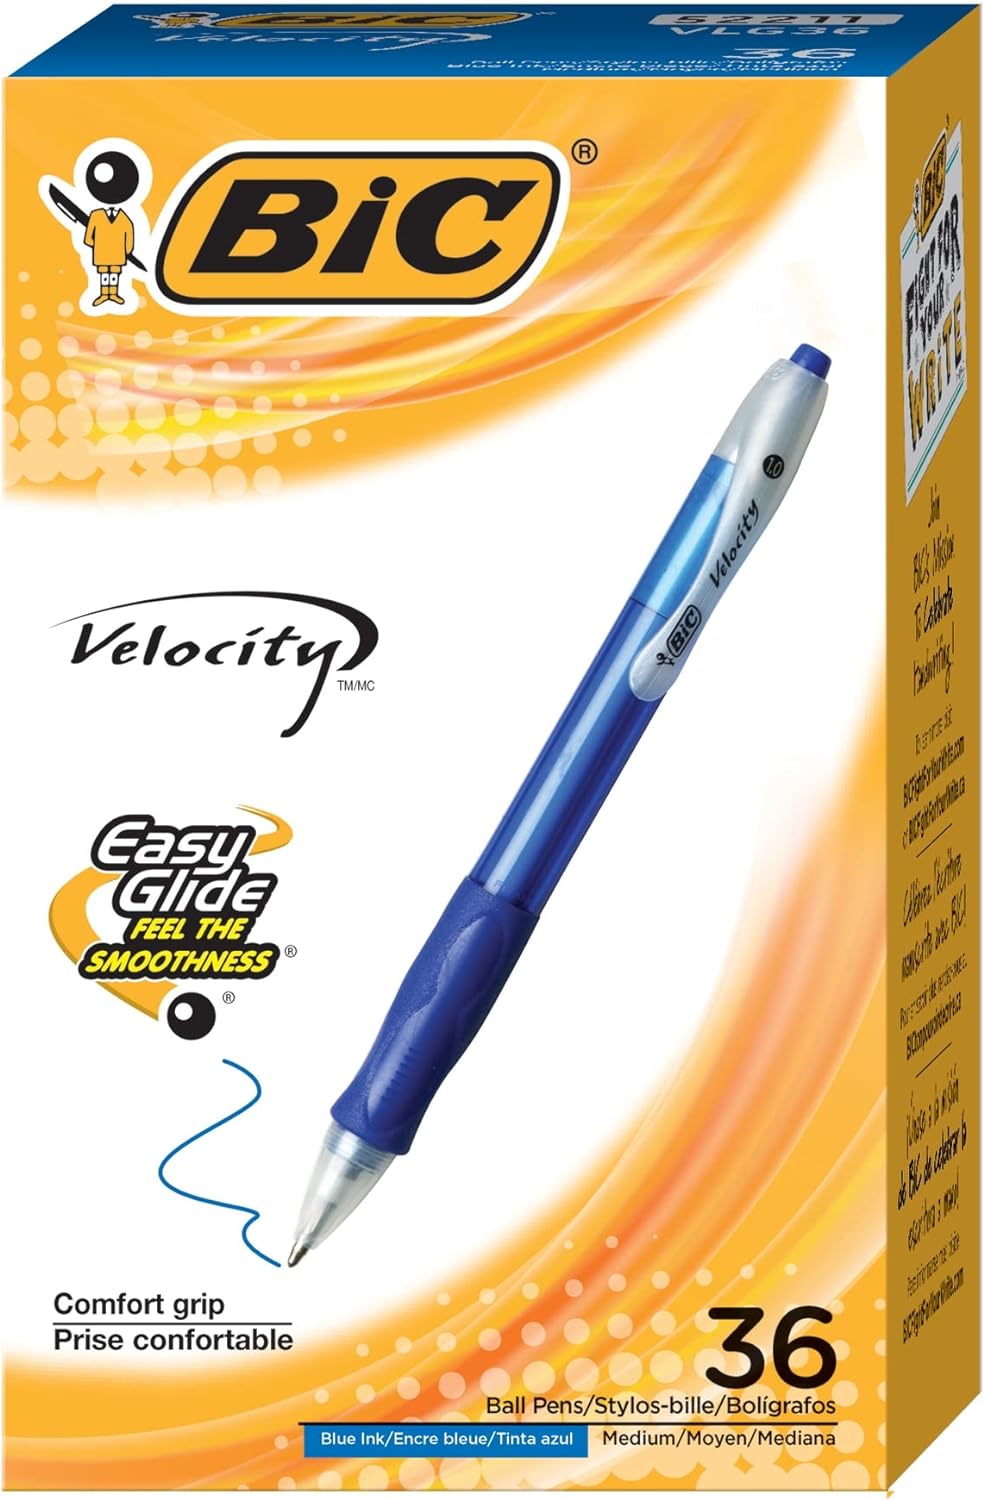 BIC Velocity Retractable Ballpoint Pen, Medium Point (1.0mm), Blue Ink, 36-Count Bulk Pack of Pens